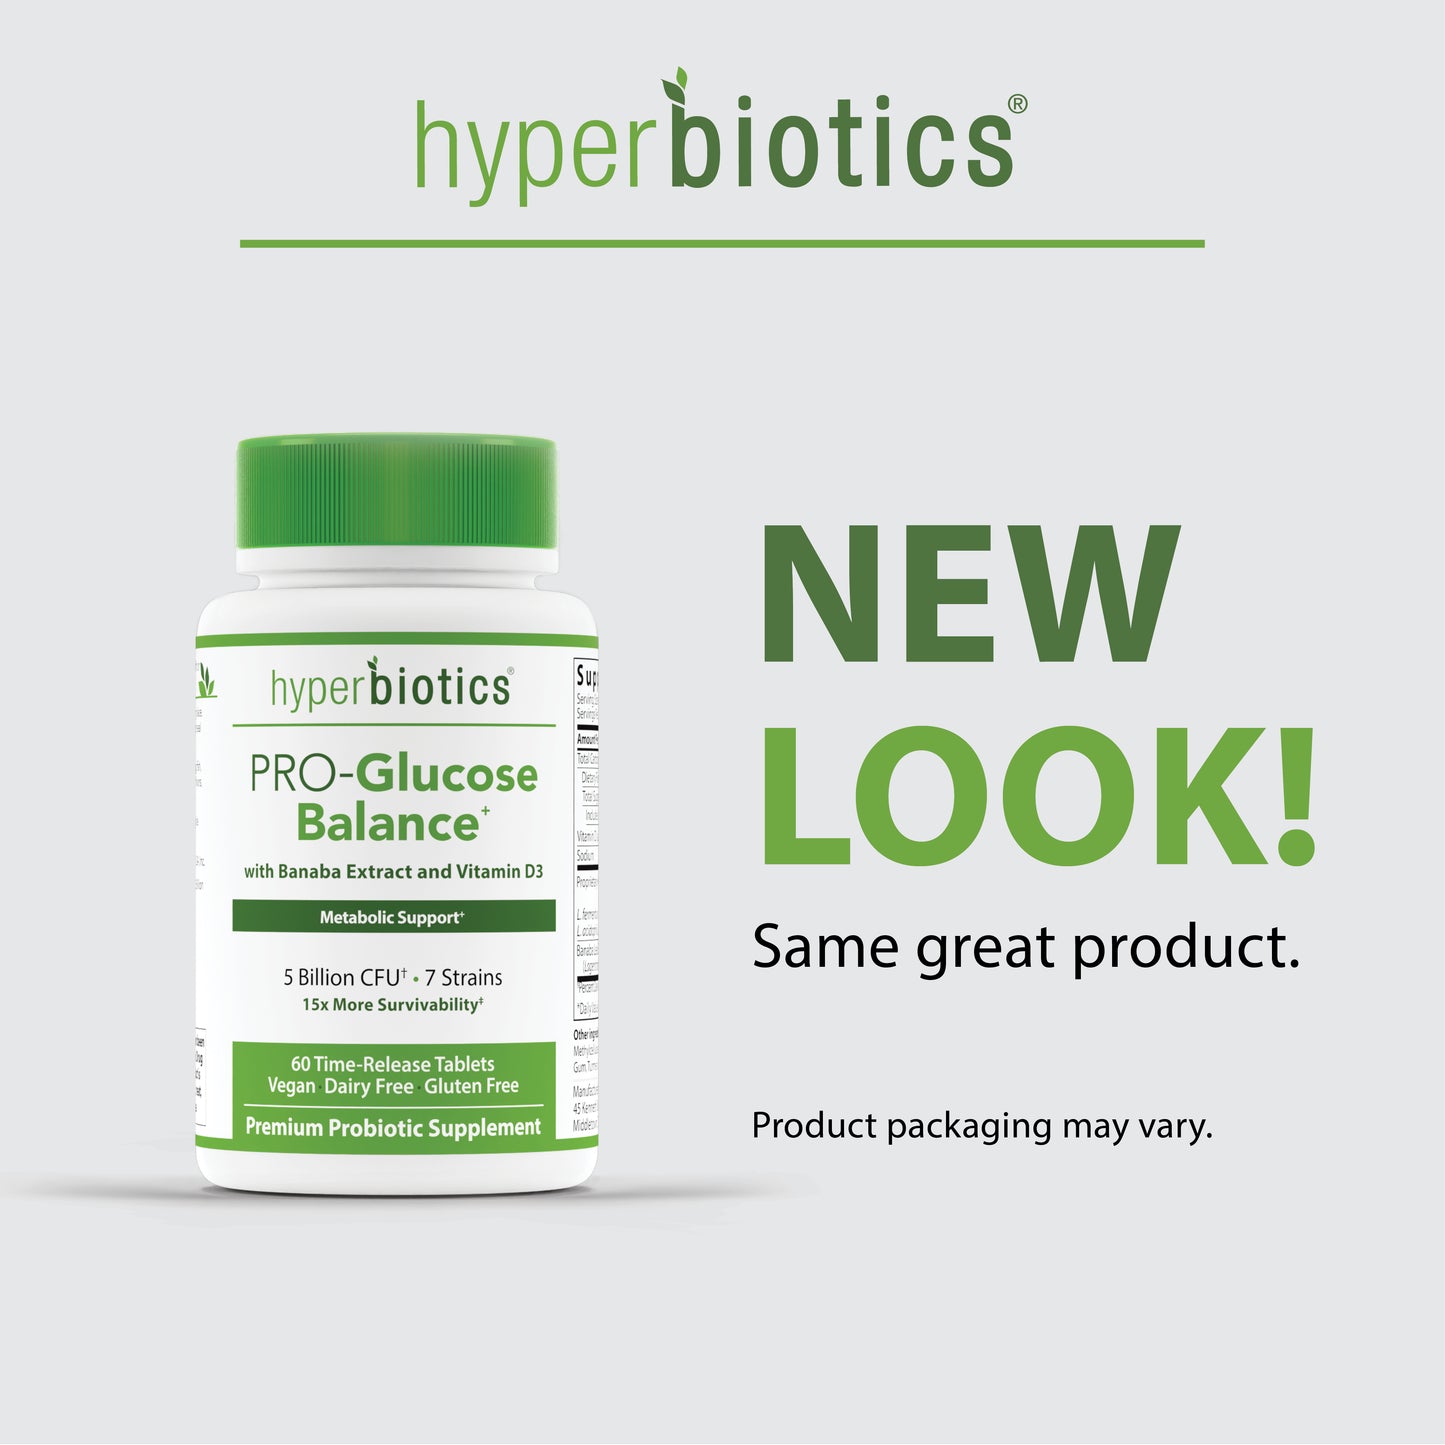 Hyperbiotics PRO-Glucose Balance - formally PRO-Glucose Support. New Look, same product.